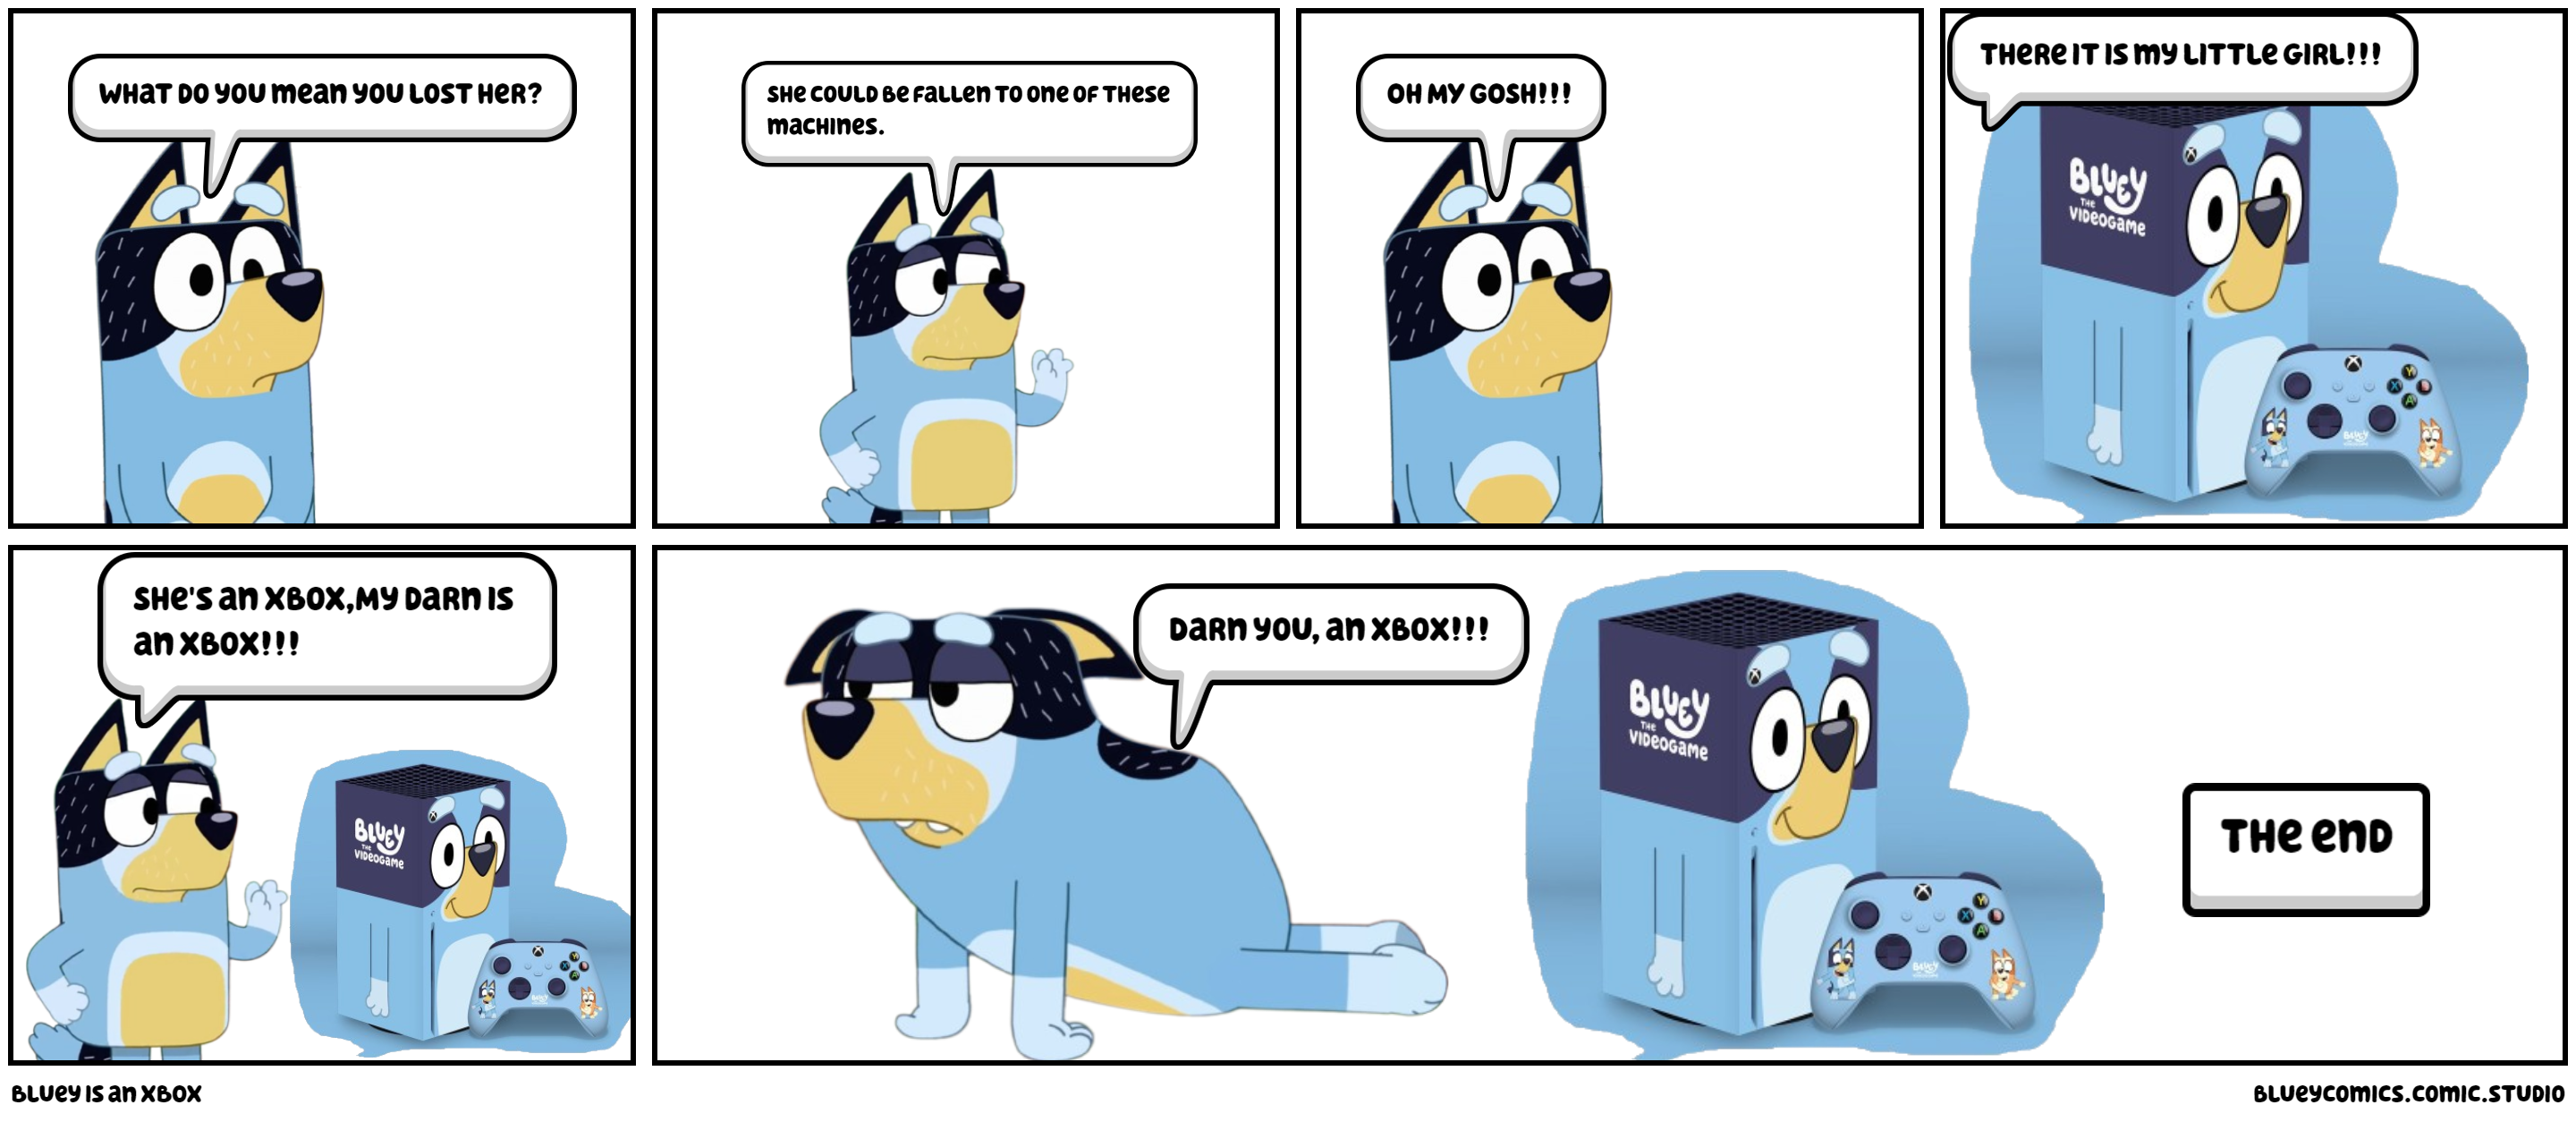 Bluey is an XBOX